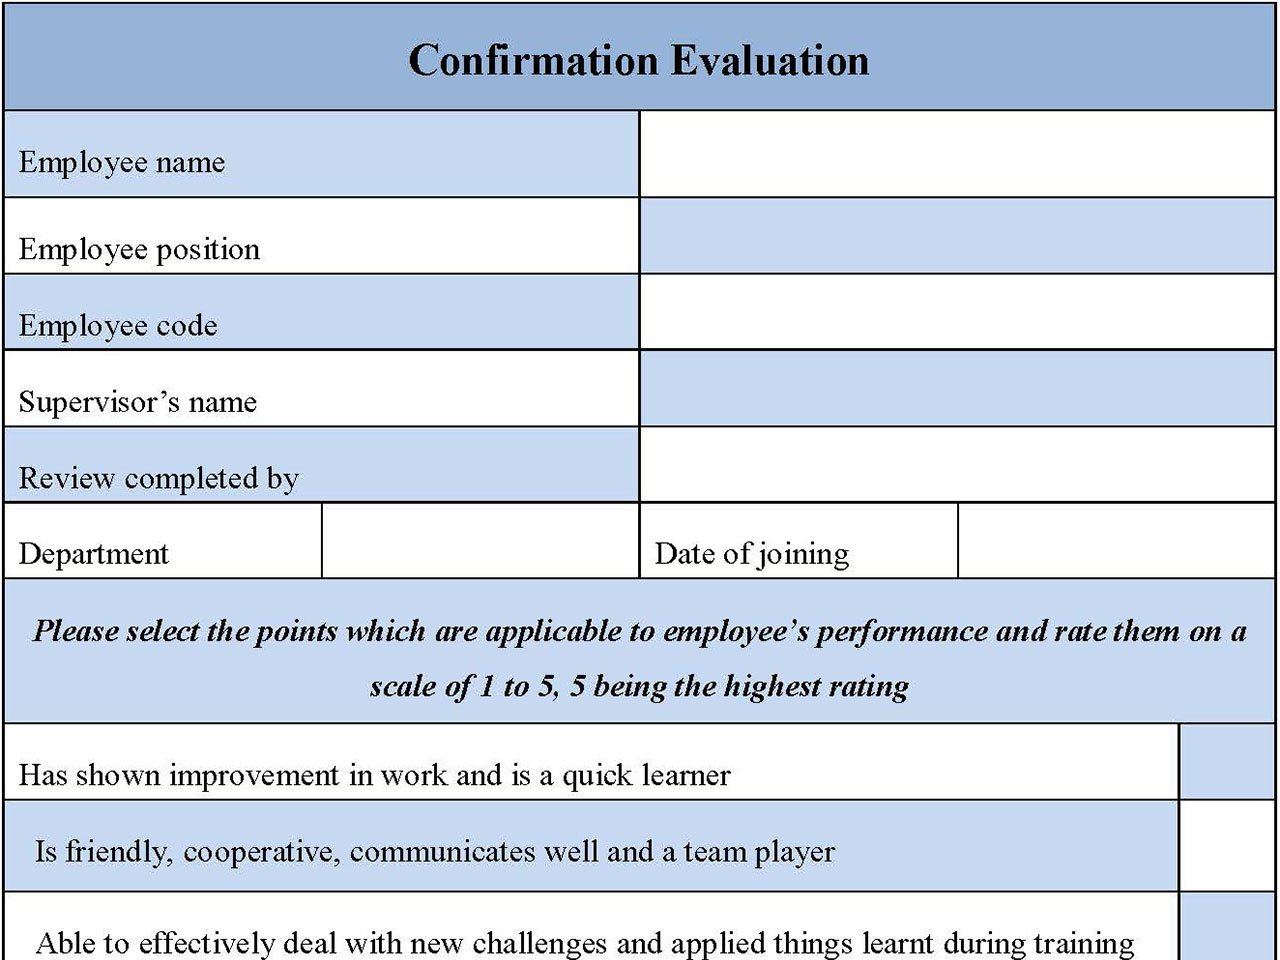 Confirmation Evaluation Form